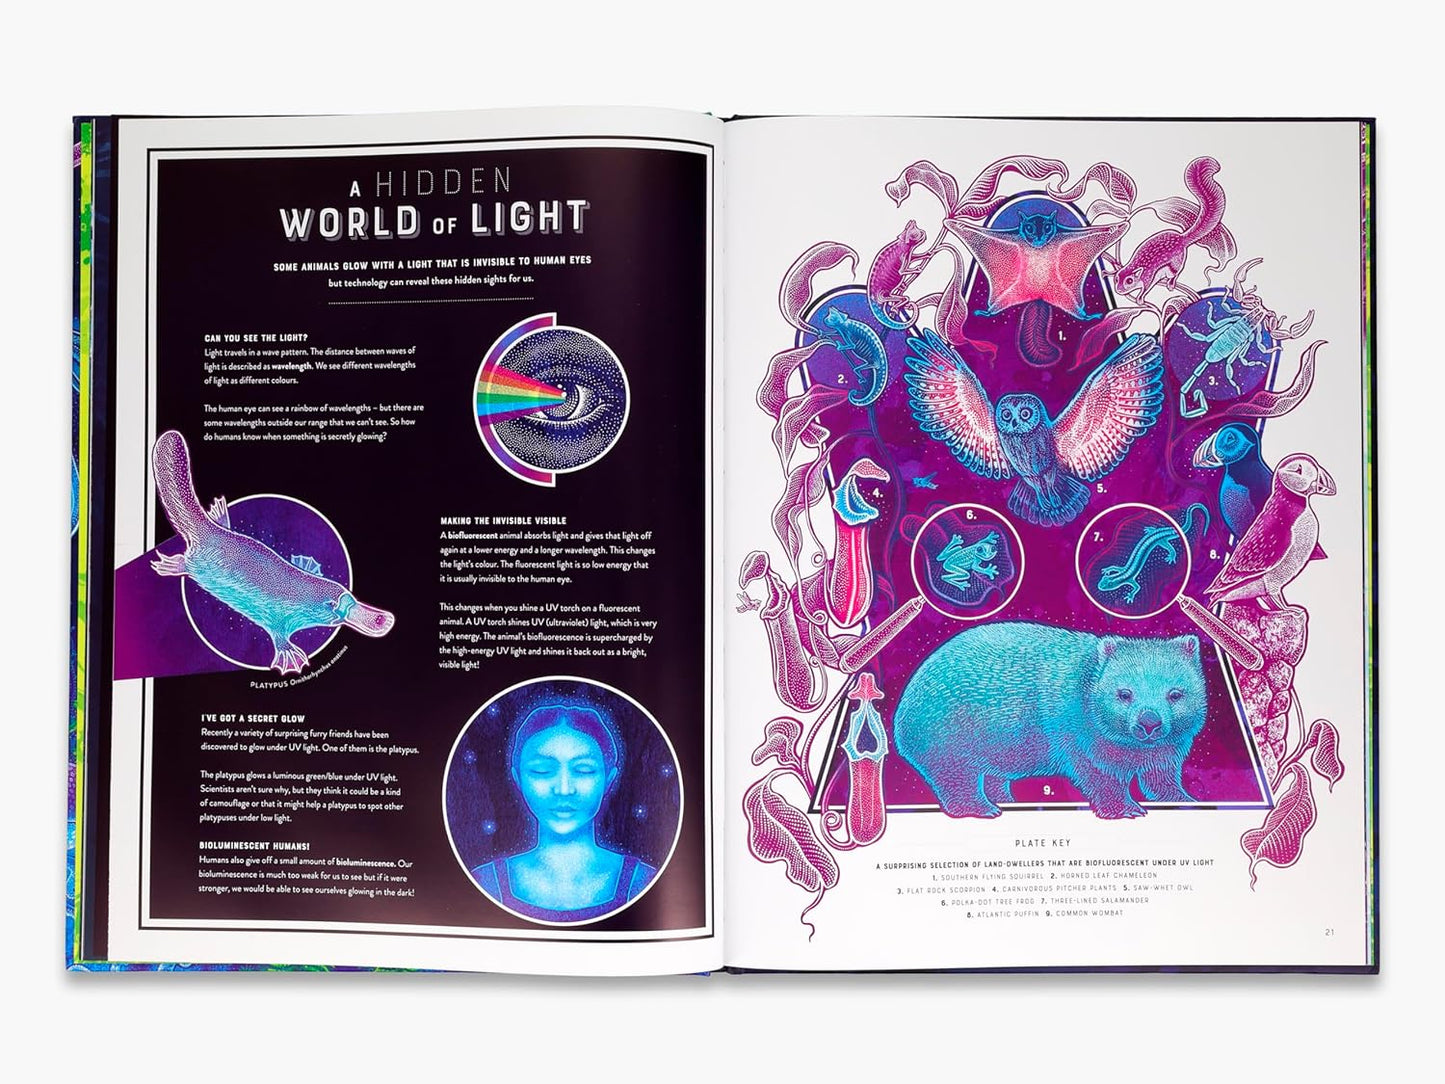 Glow - The Wild Wonders of BioLinescence